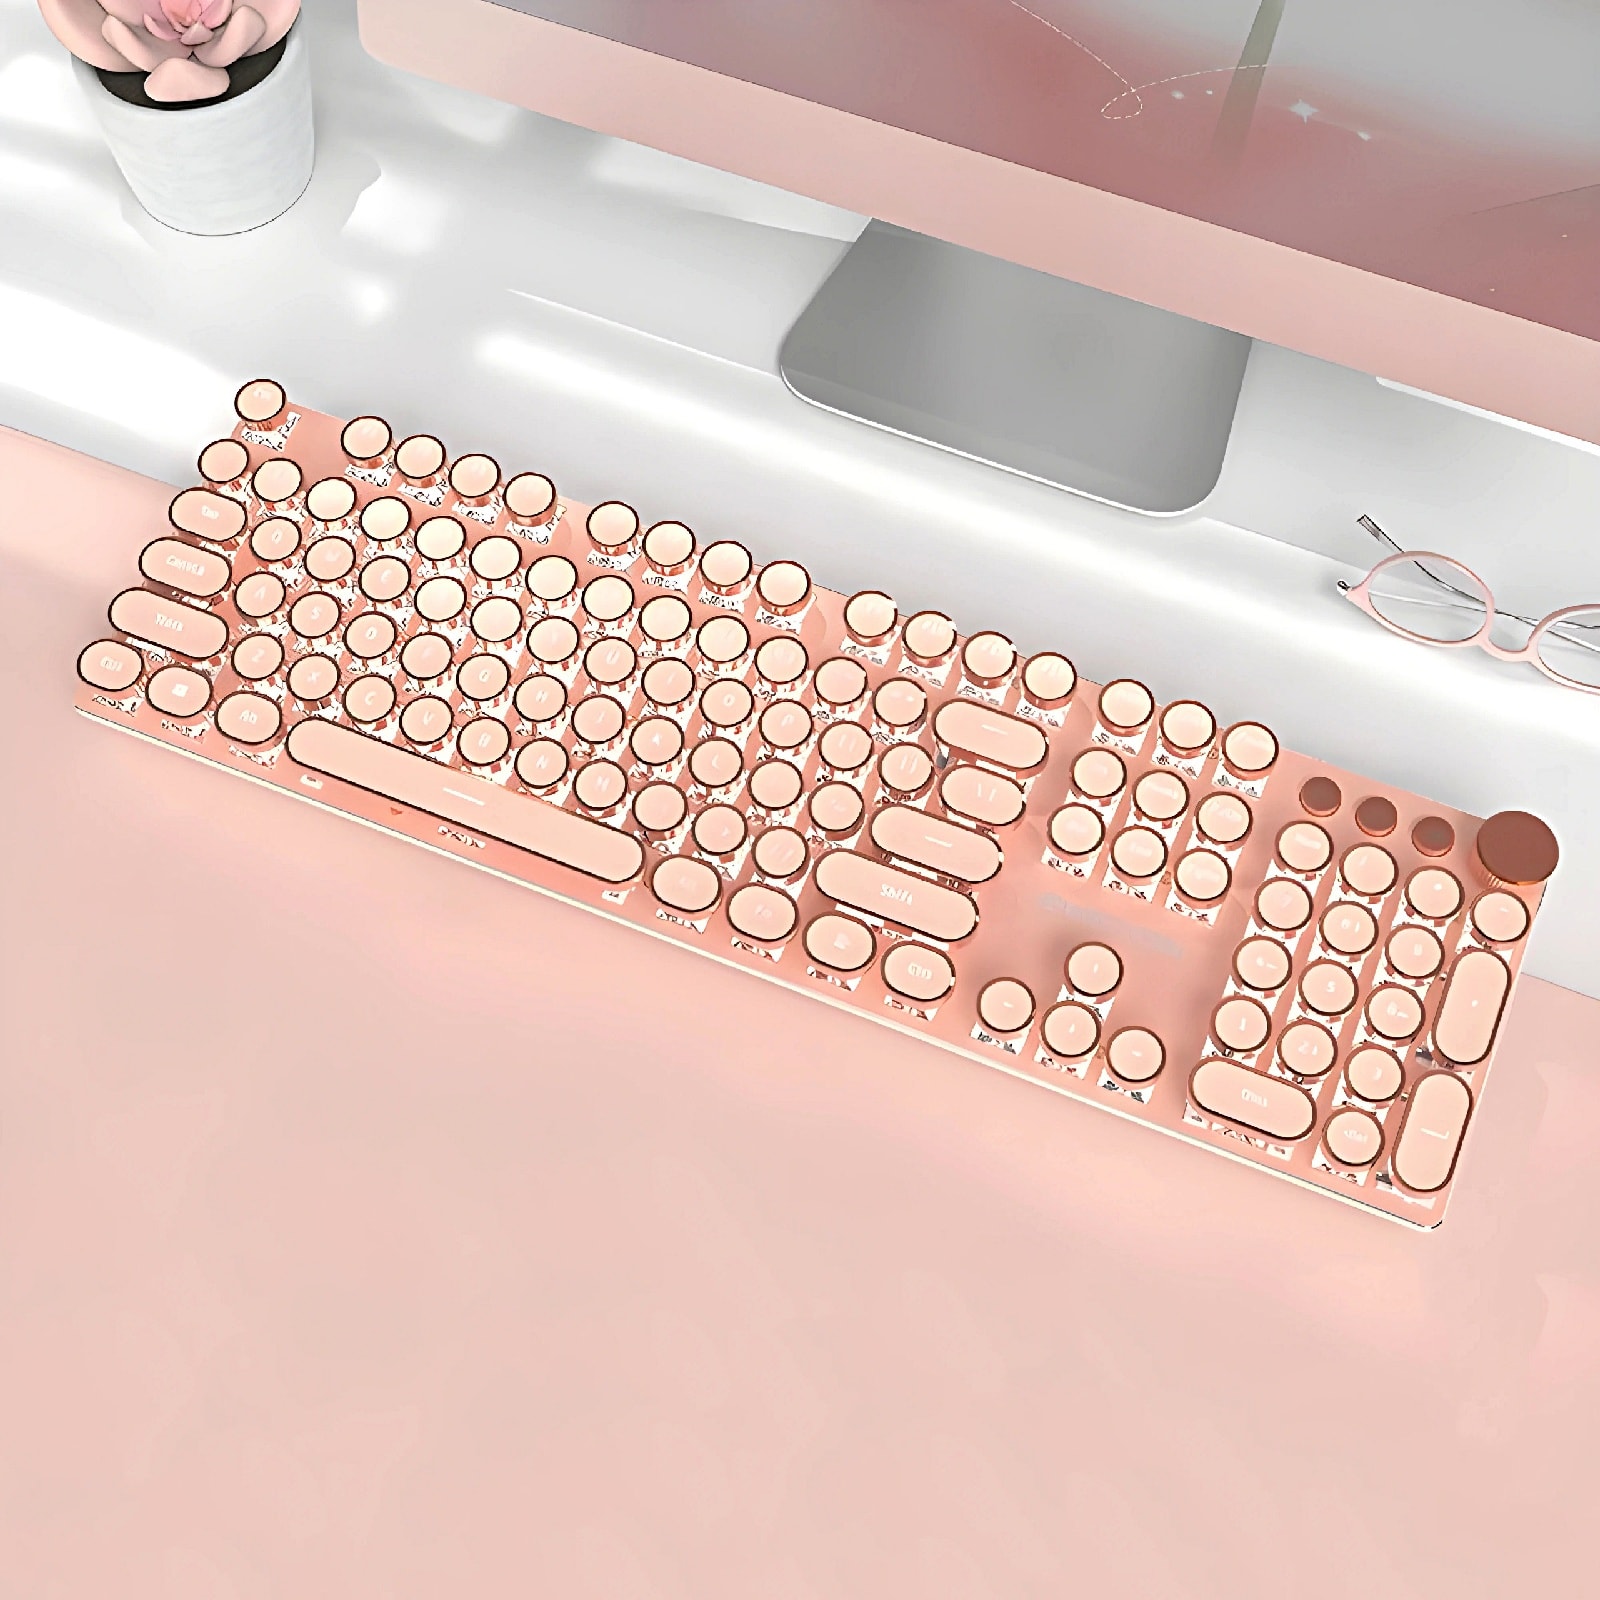 Retro Typewriter Bluetooth Keyboard 2S - Milk Tea Cream | The PNK Stuff